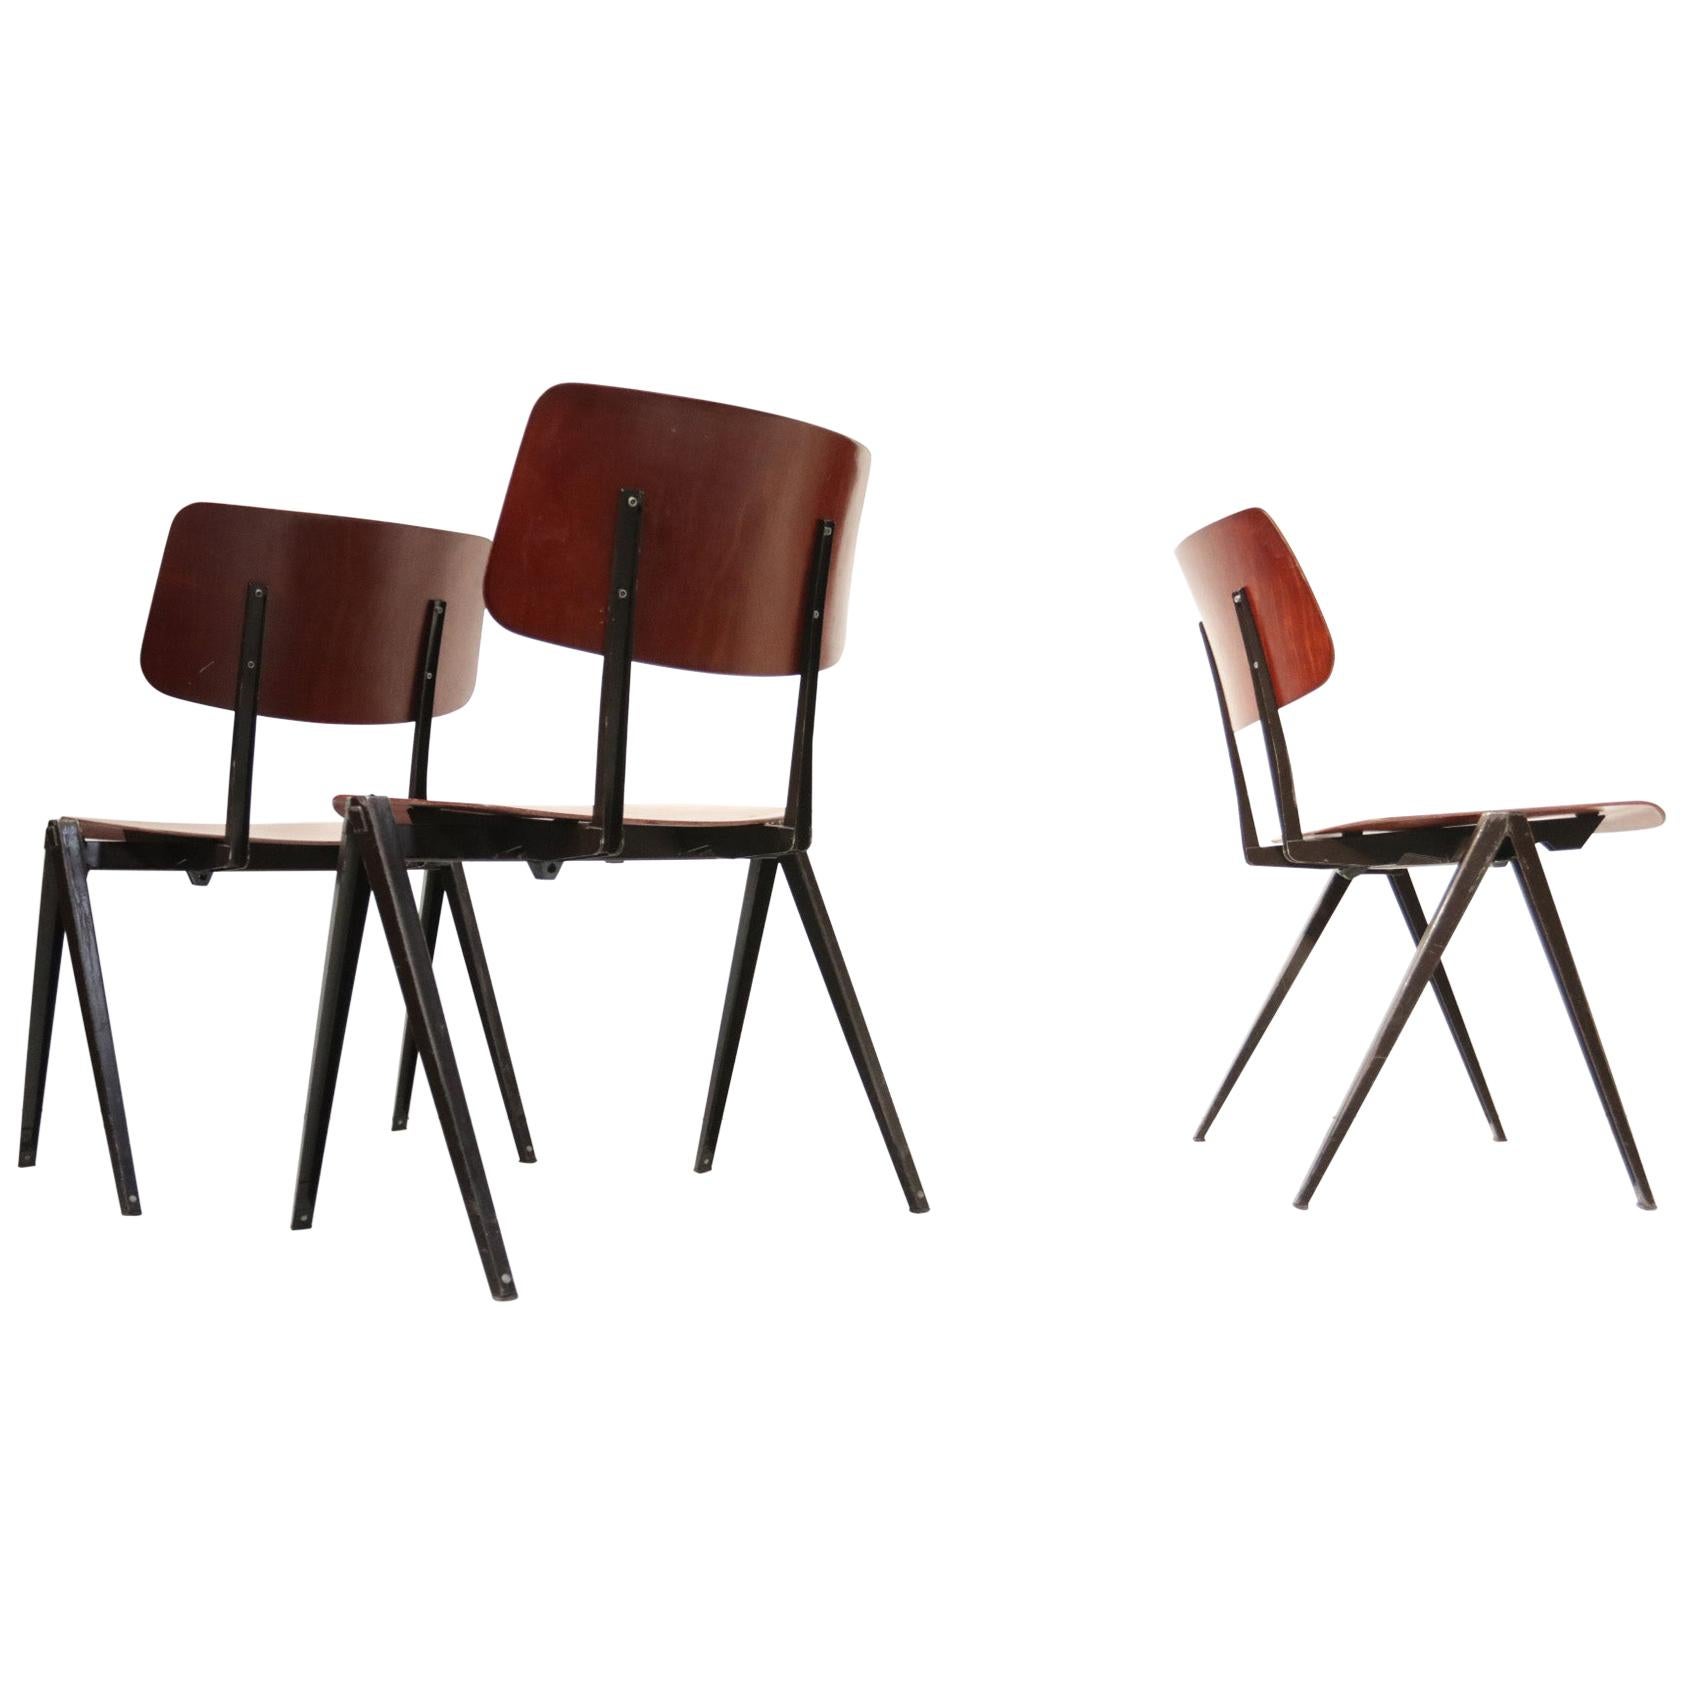 10 x Dutch Industrial Design Prouve Style School Chairs S21 Compas Galvanitas